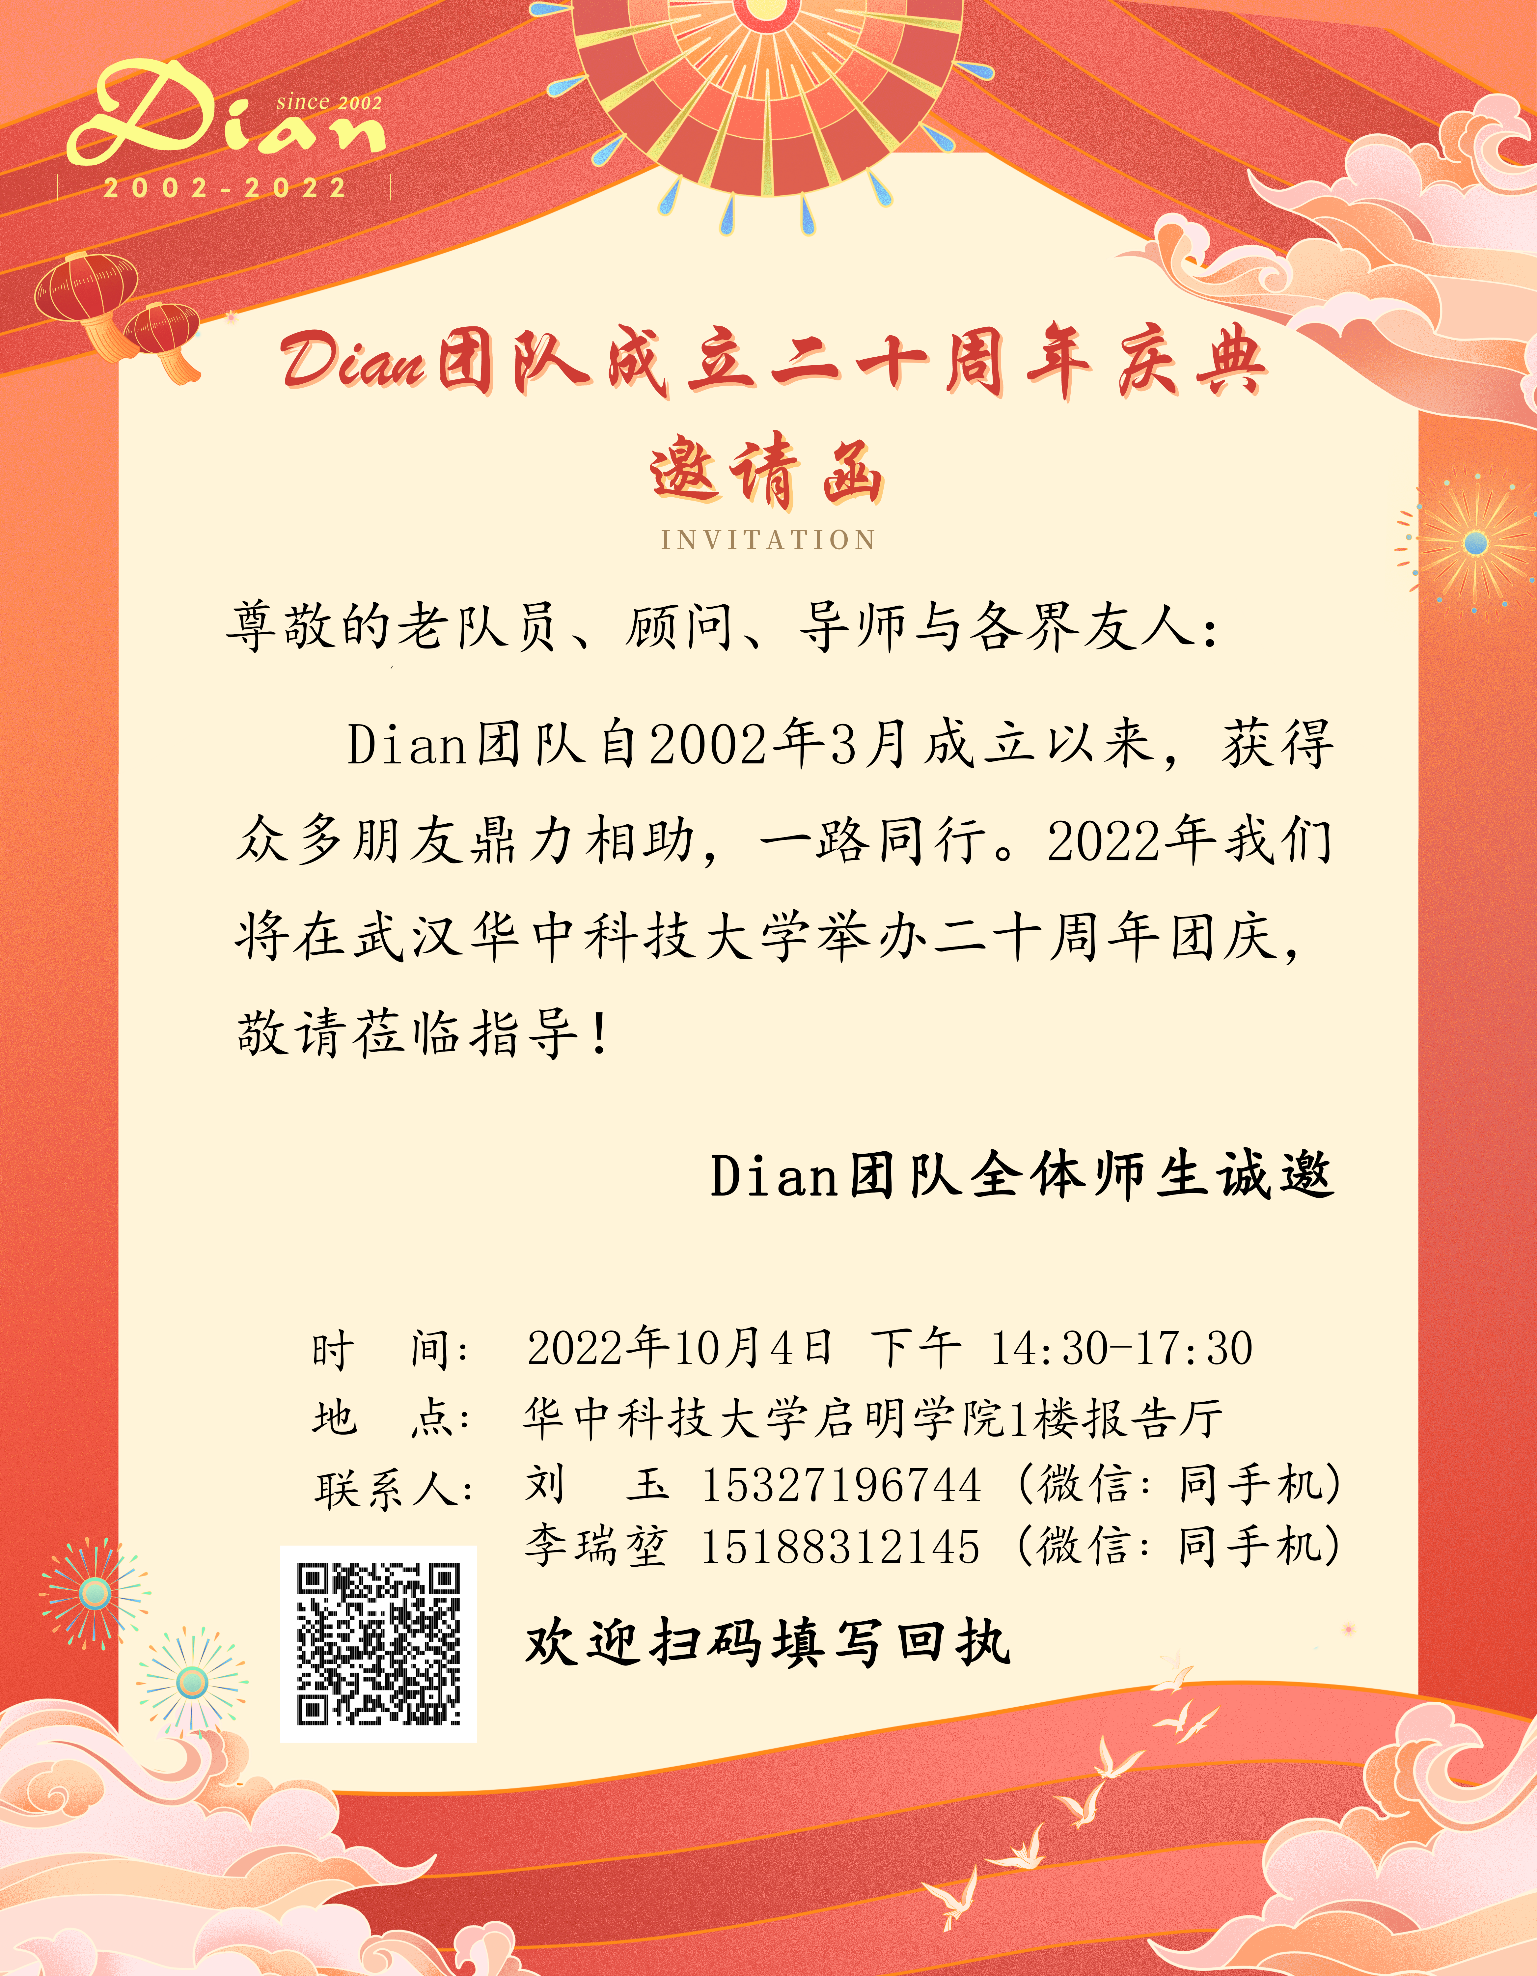 Dian团队20周年团庆邀请函